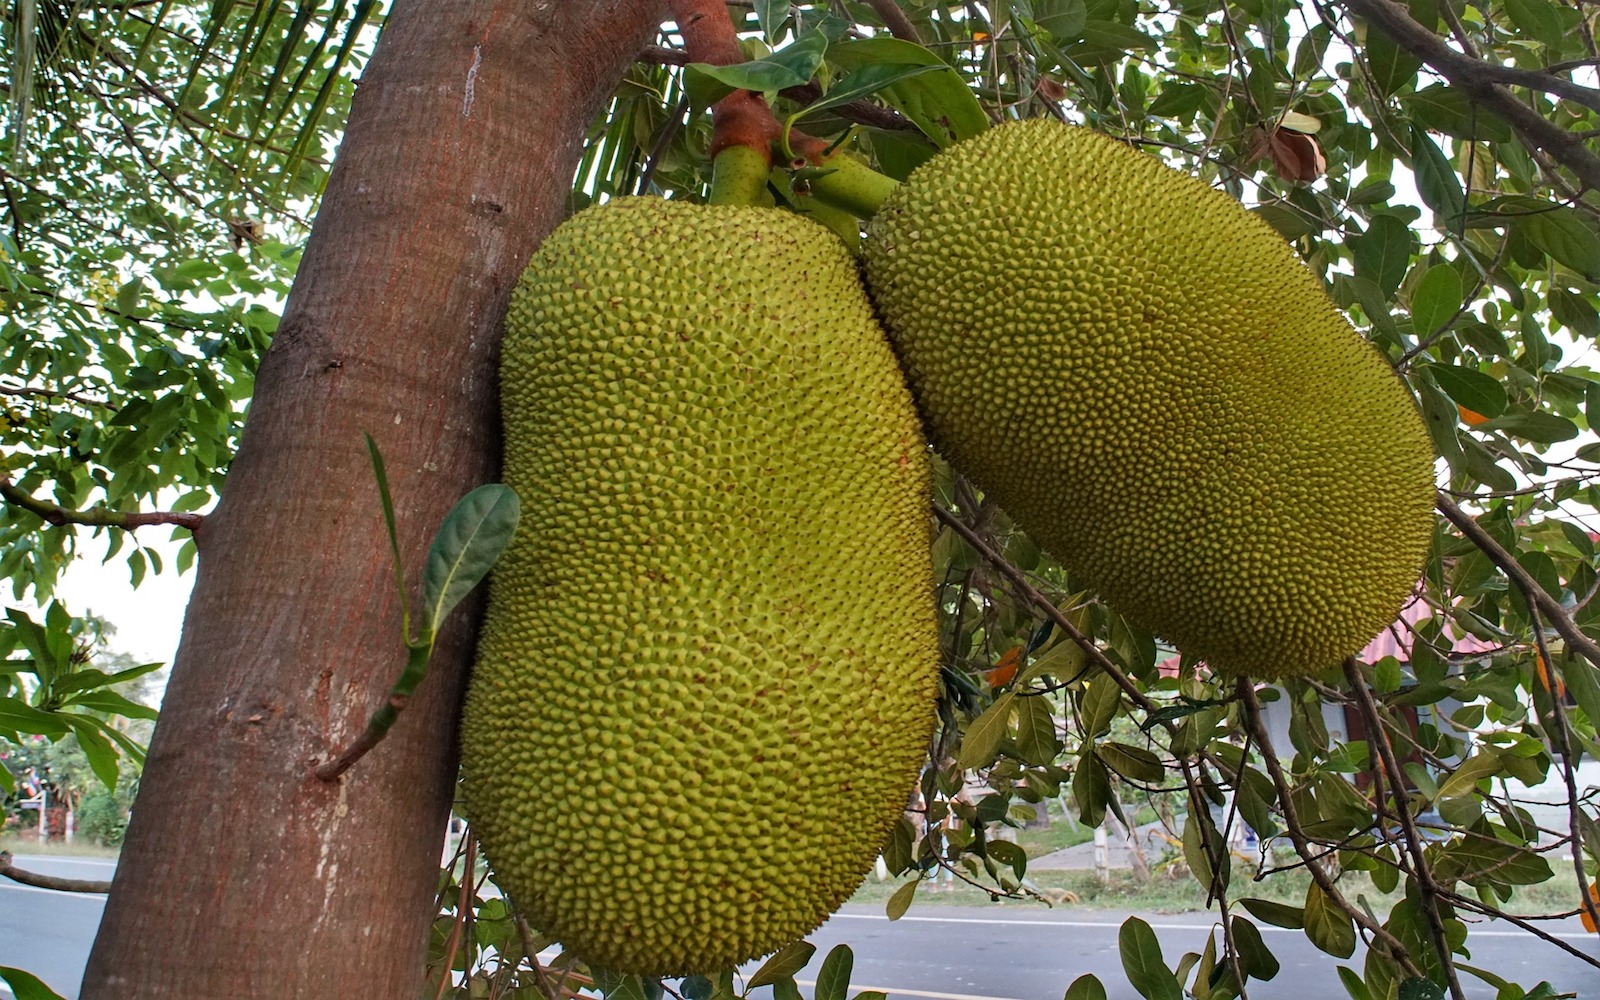 Jackfruit hanging on tree